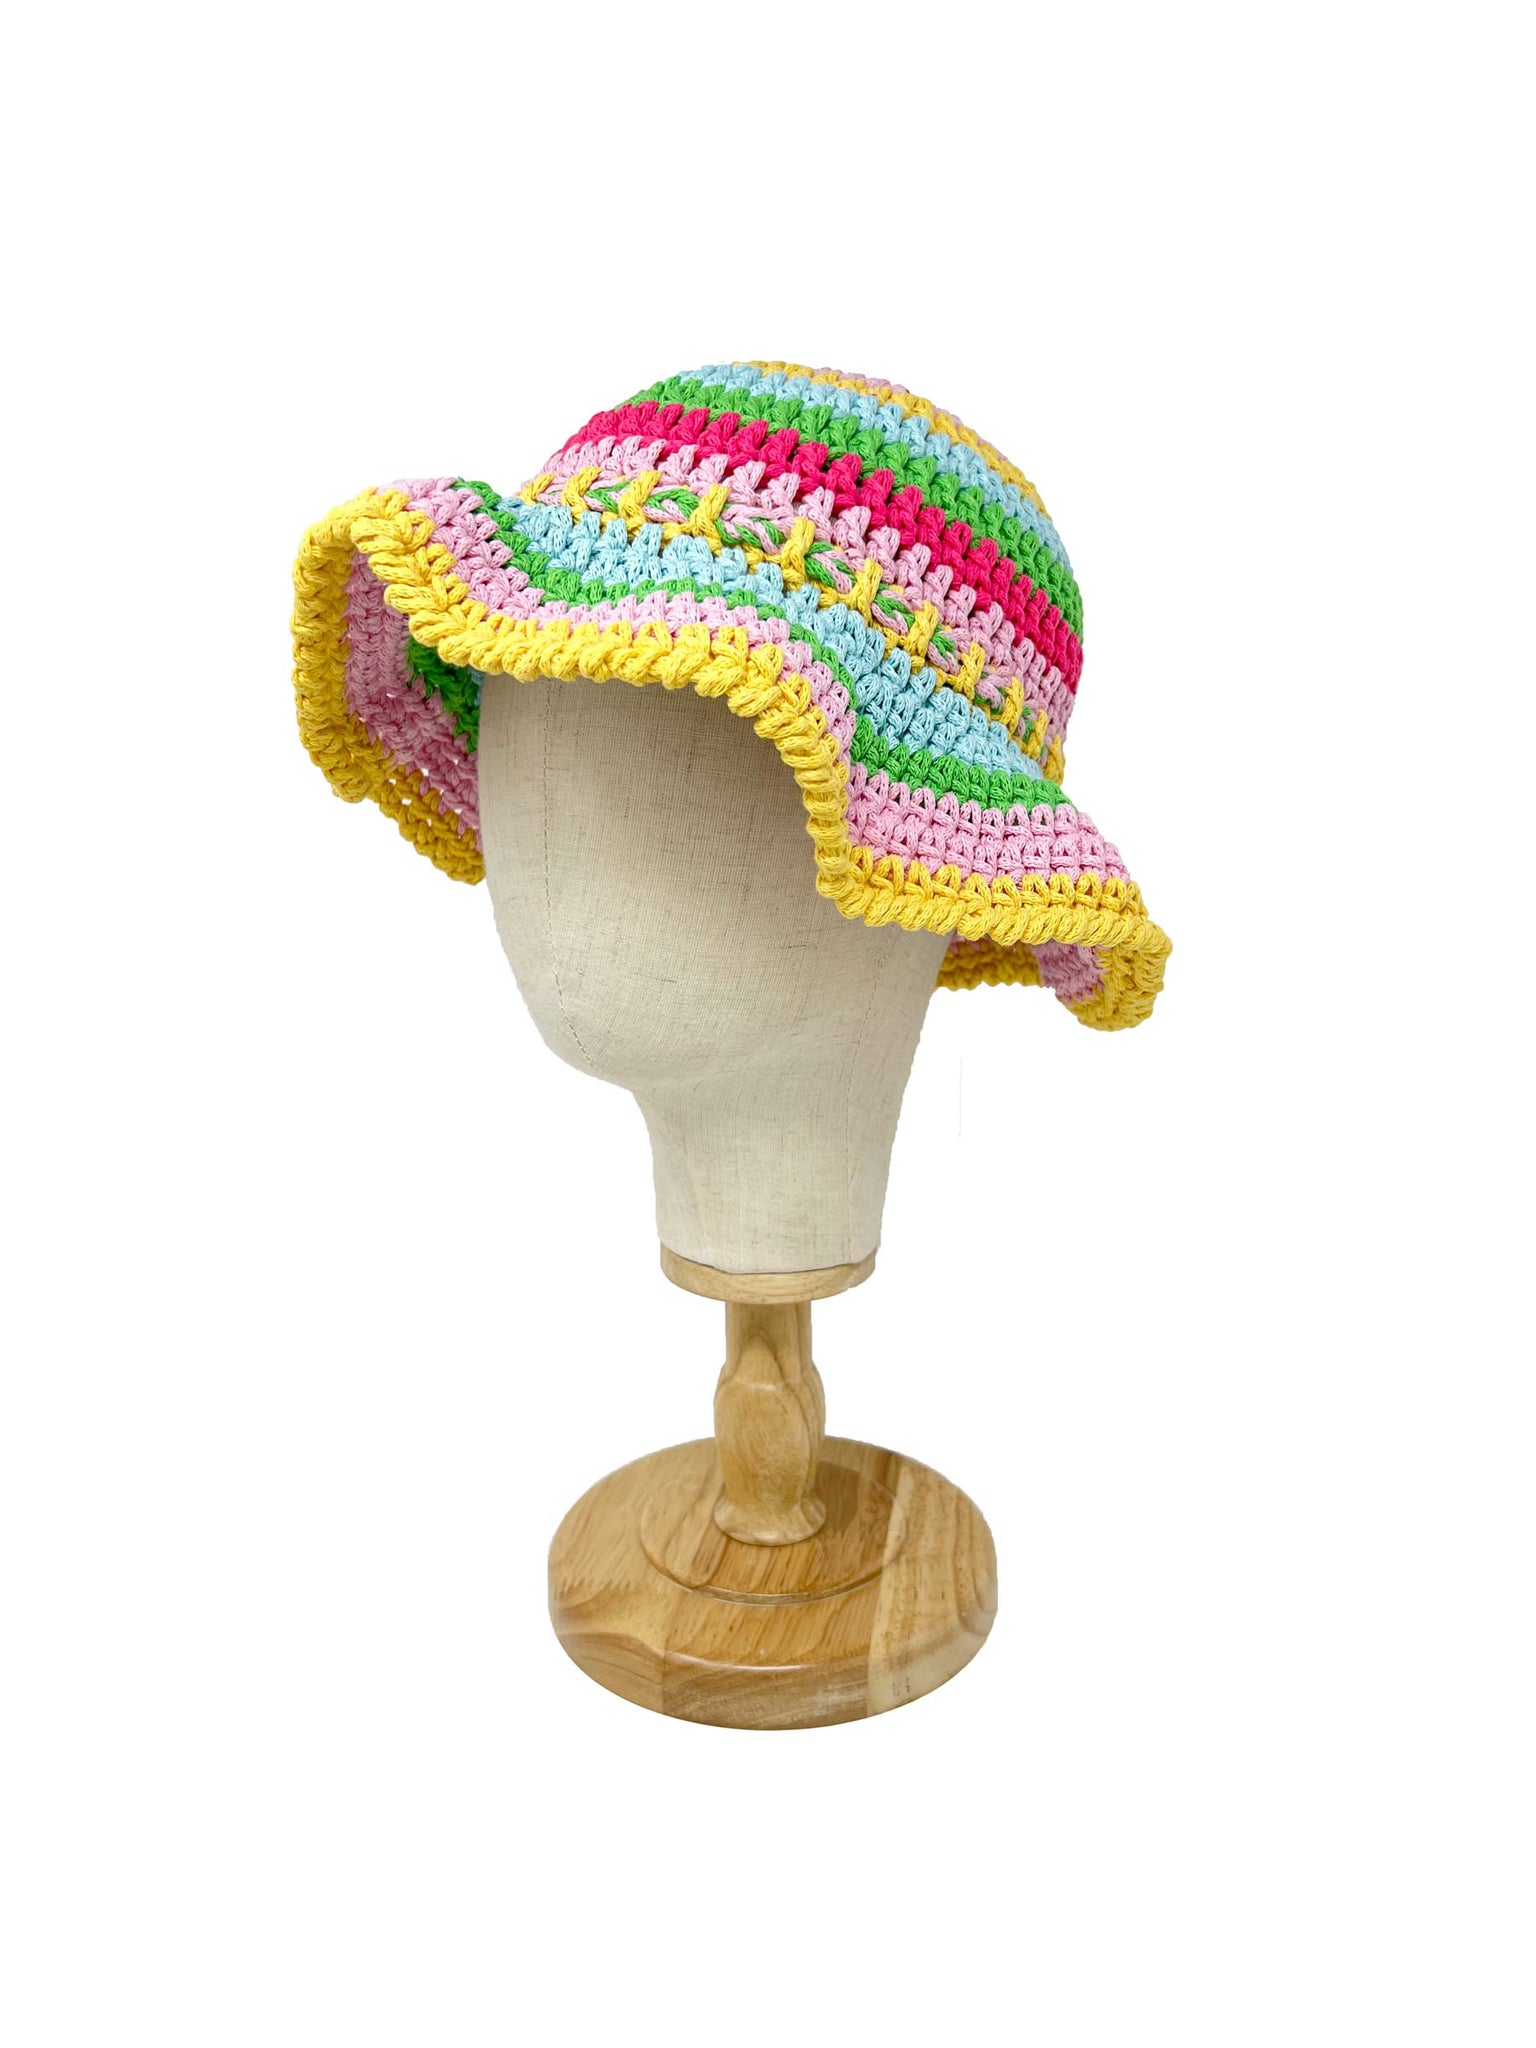 Pastels striped handmade crocheted hat